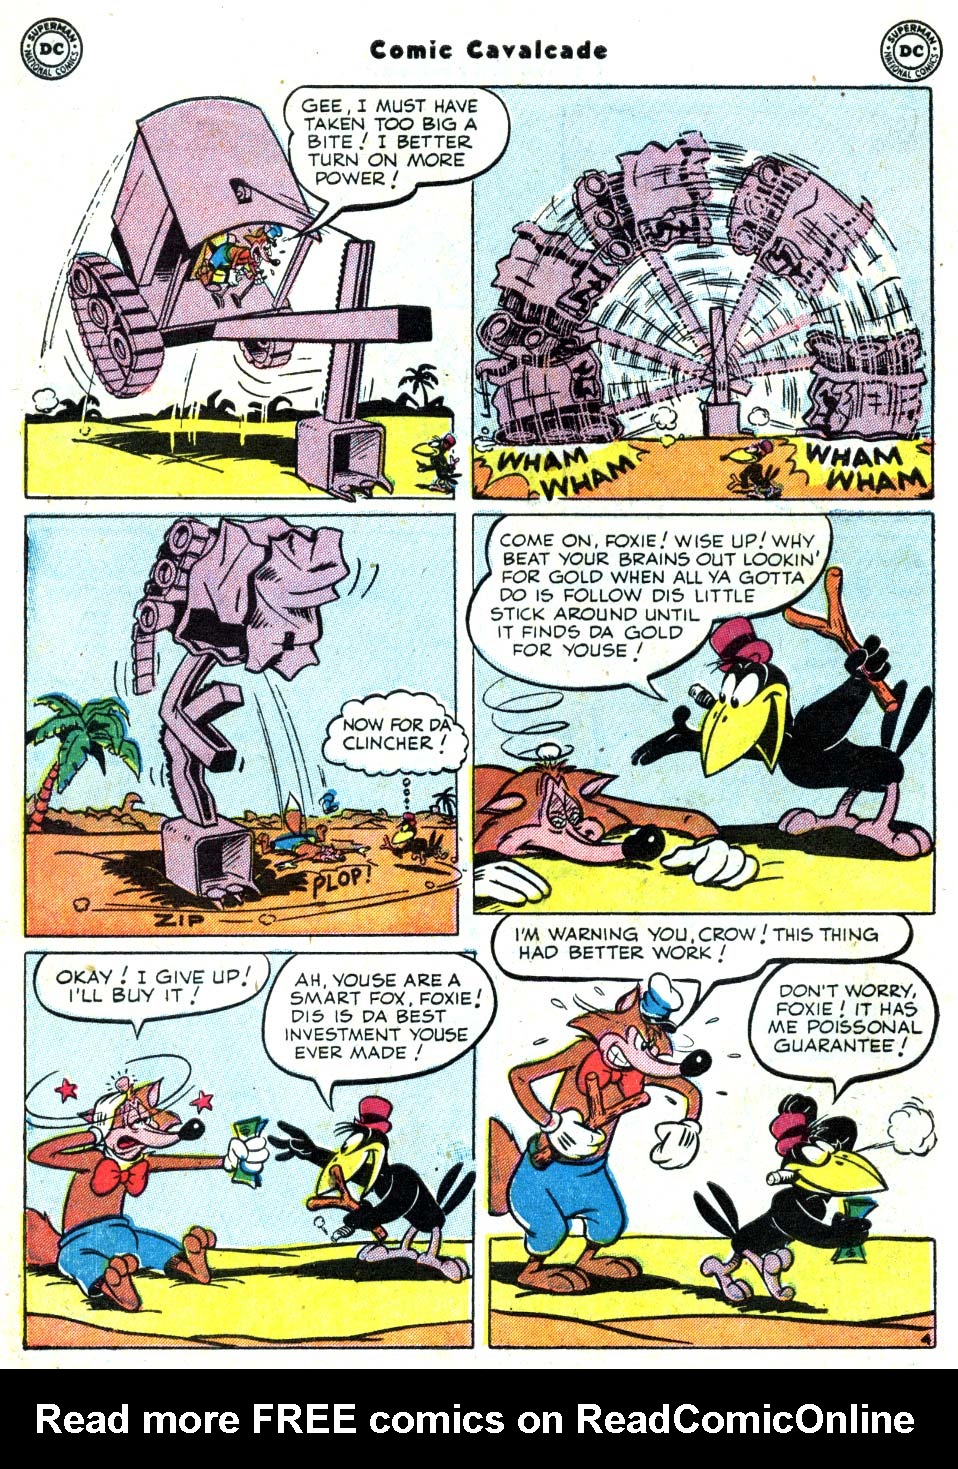 Comic Cavalcade issue 46 - Page 6